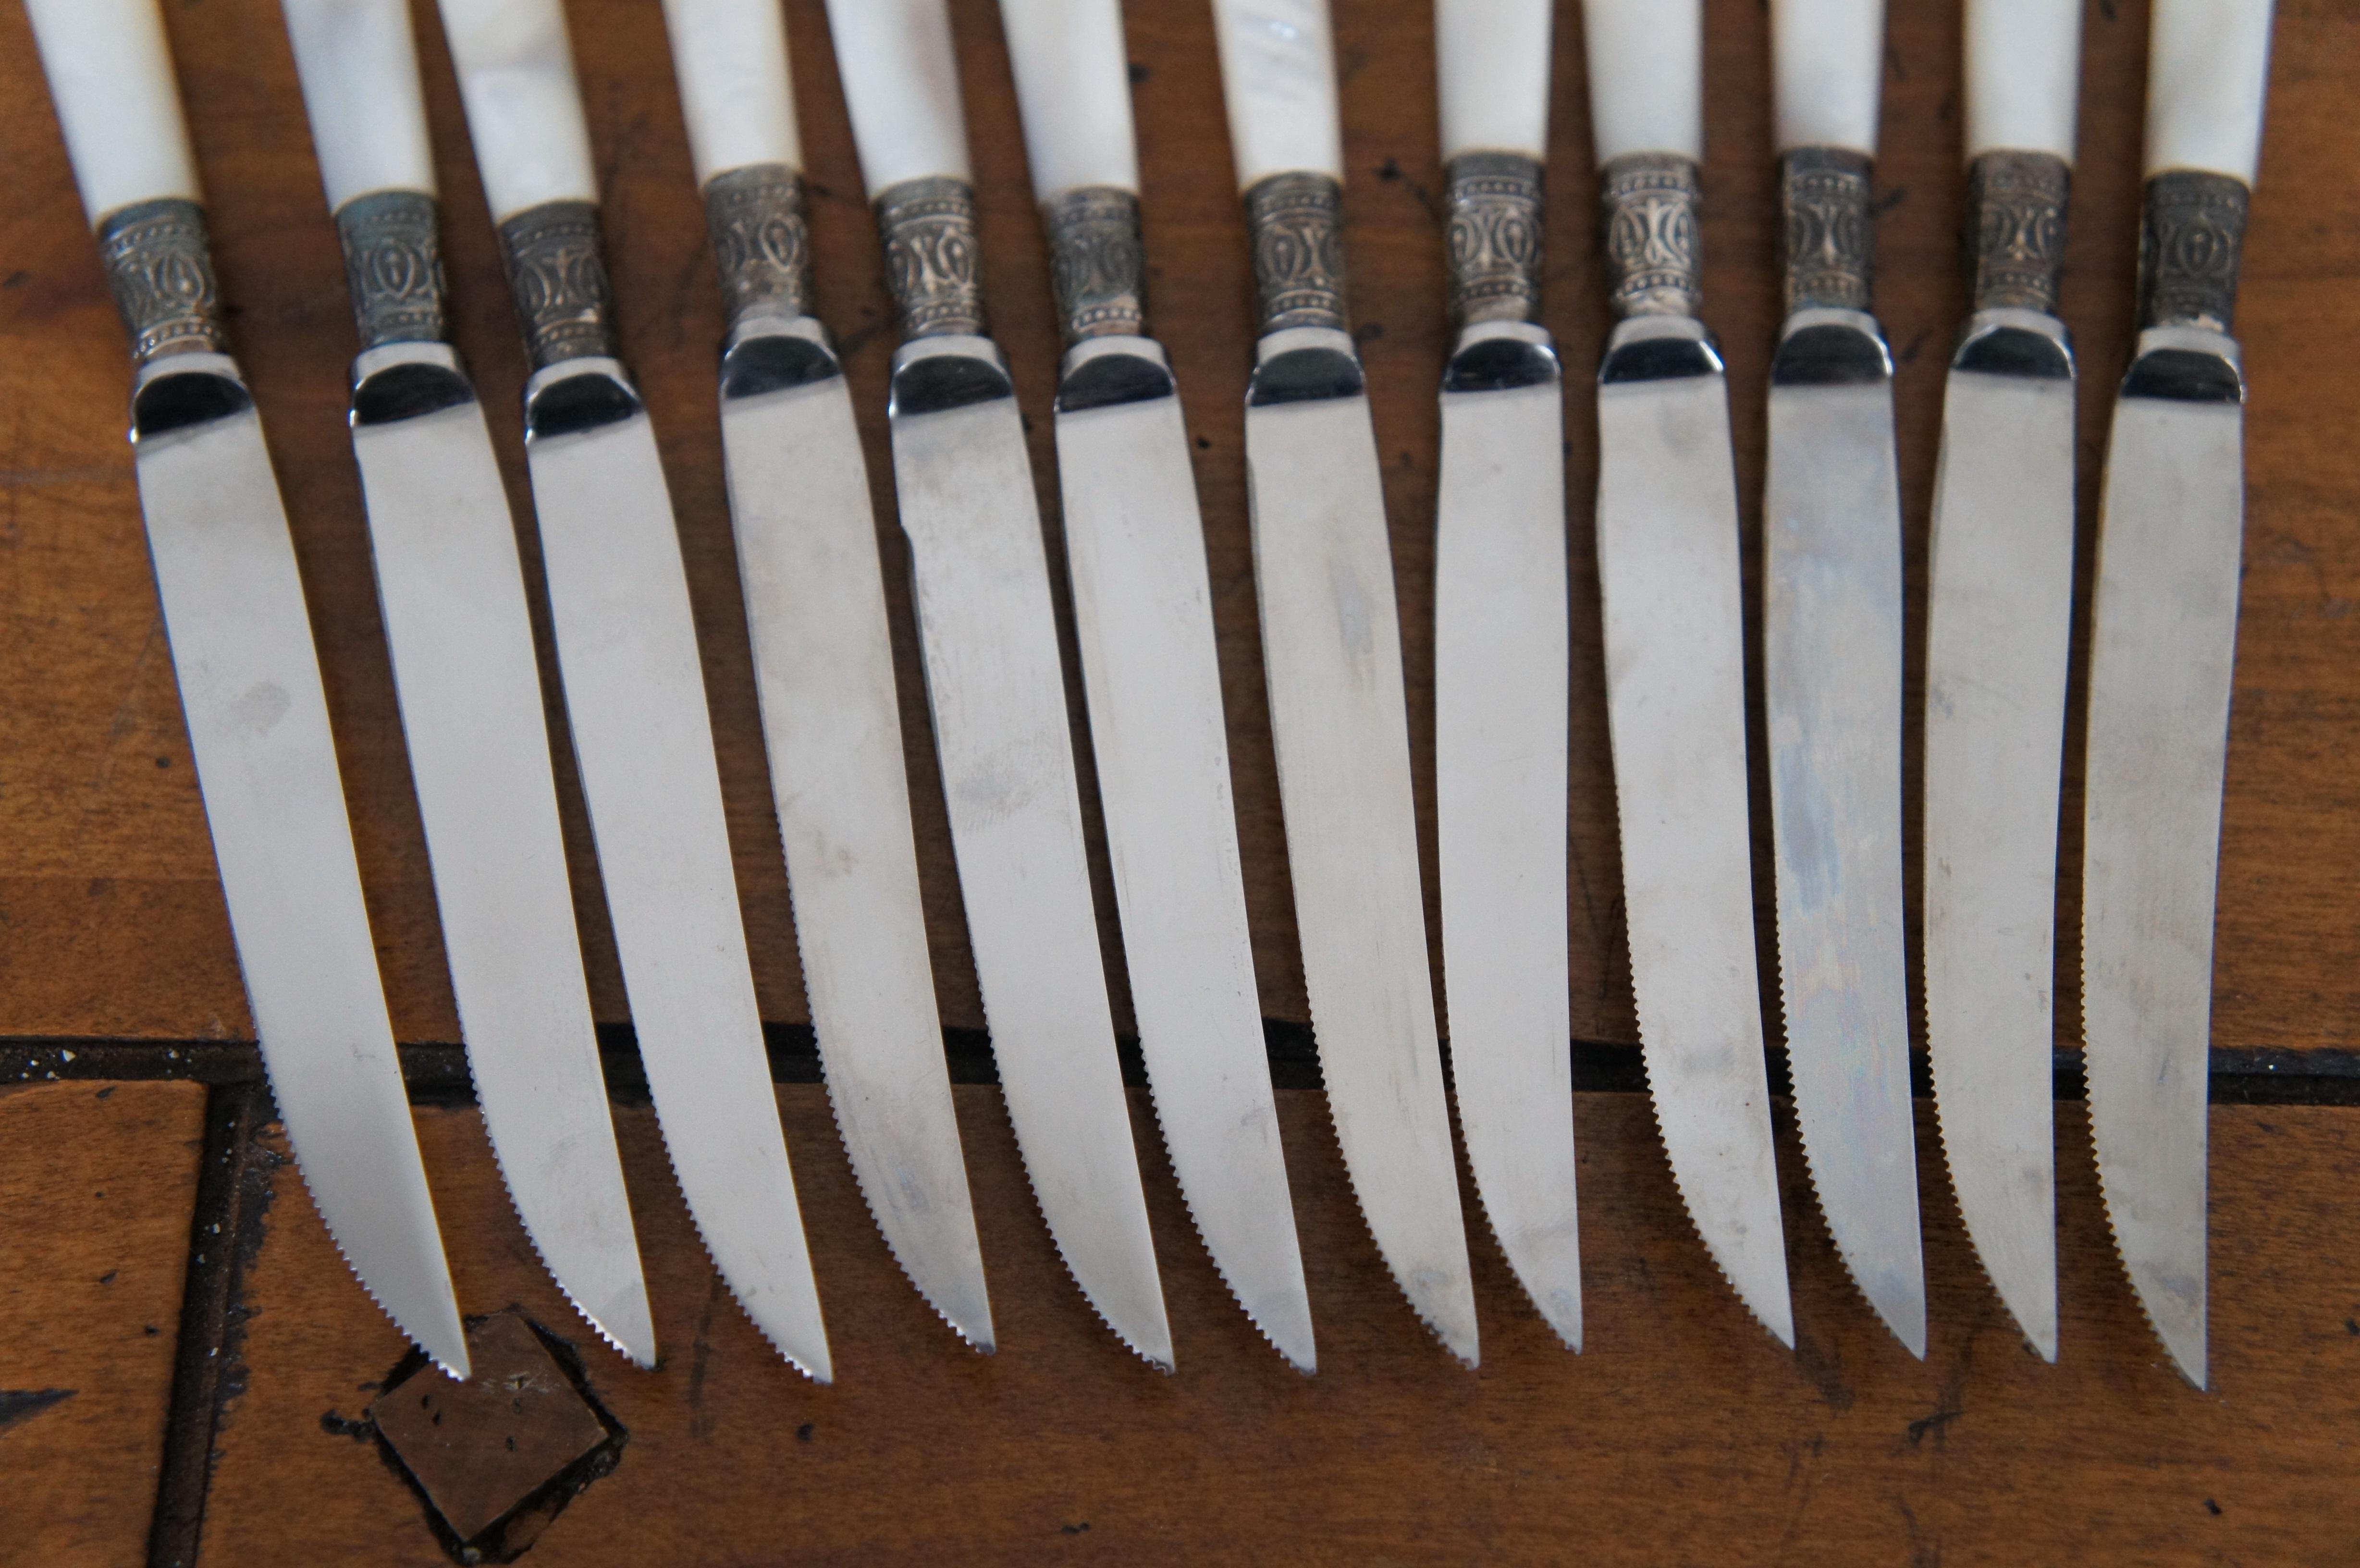 philippe richard knives